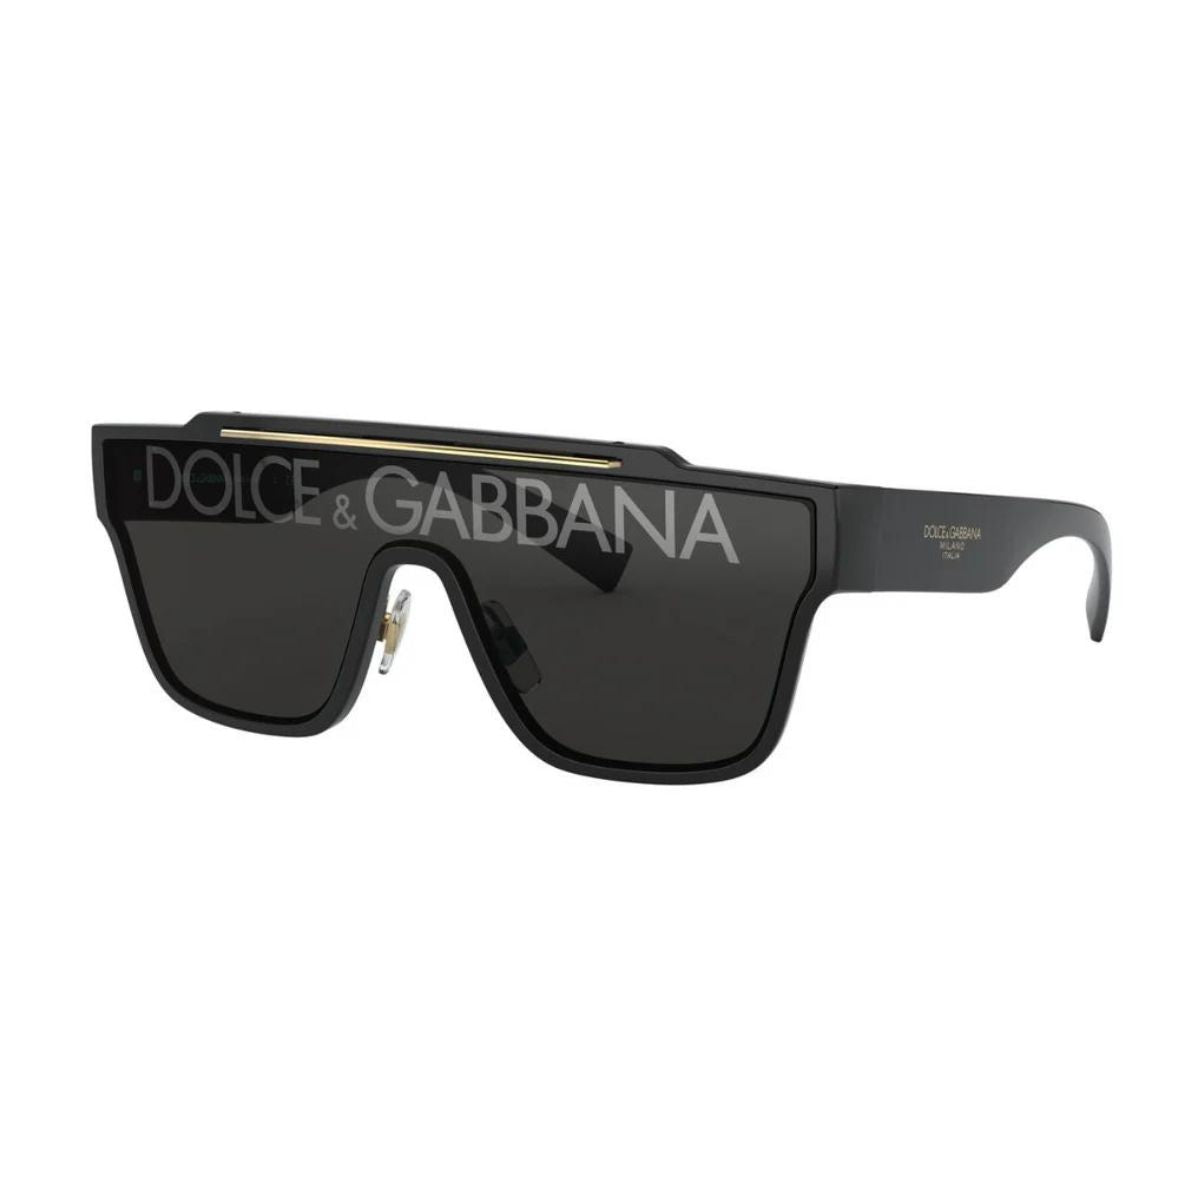 "Dolce & Gabbana DG 6125 501/M UV Protection Sunglass For Men At Optorium"